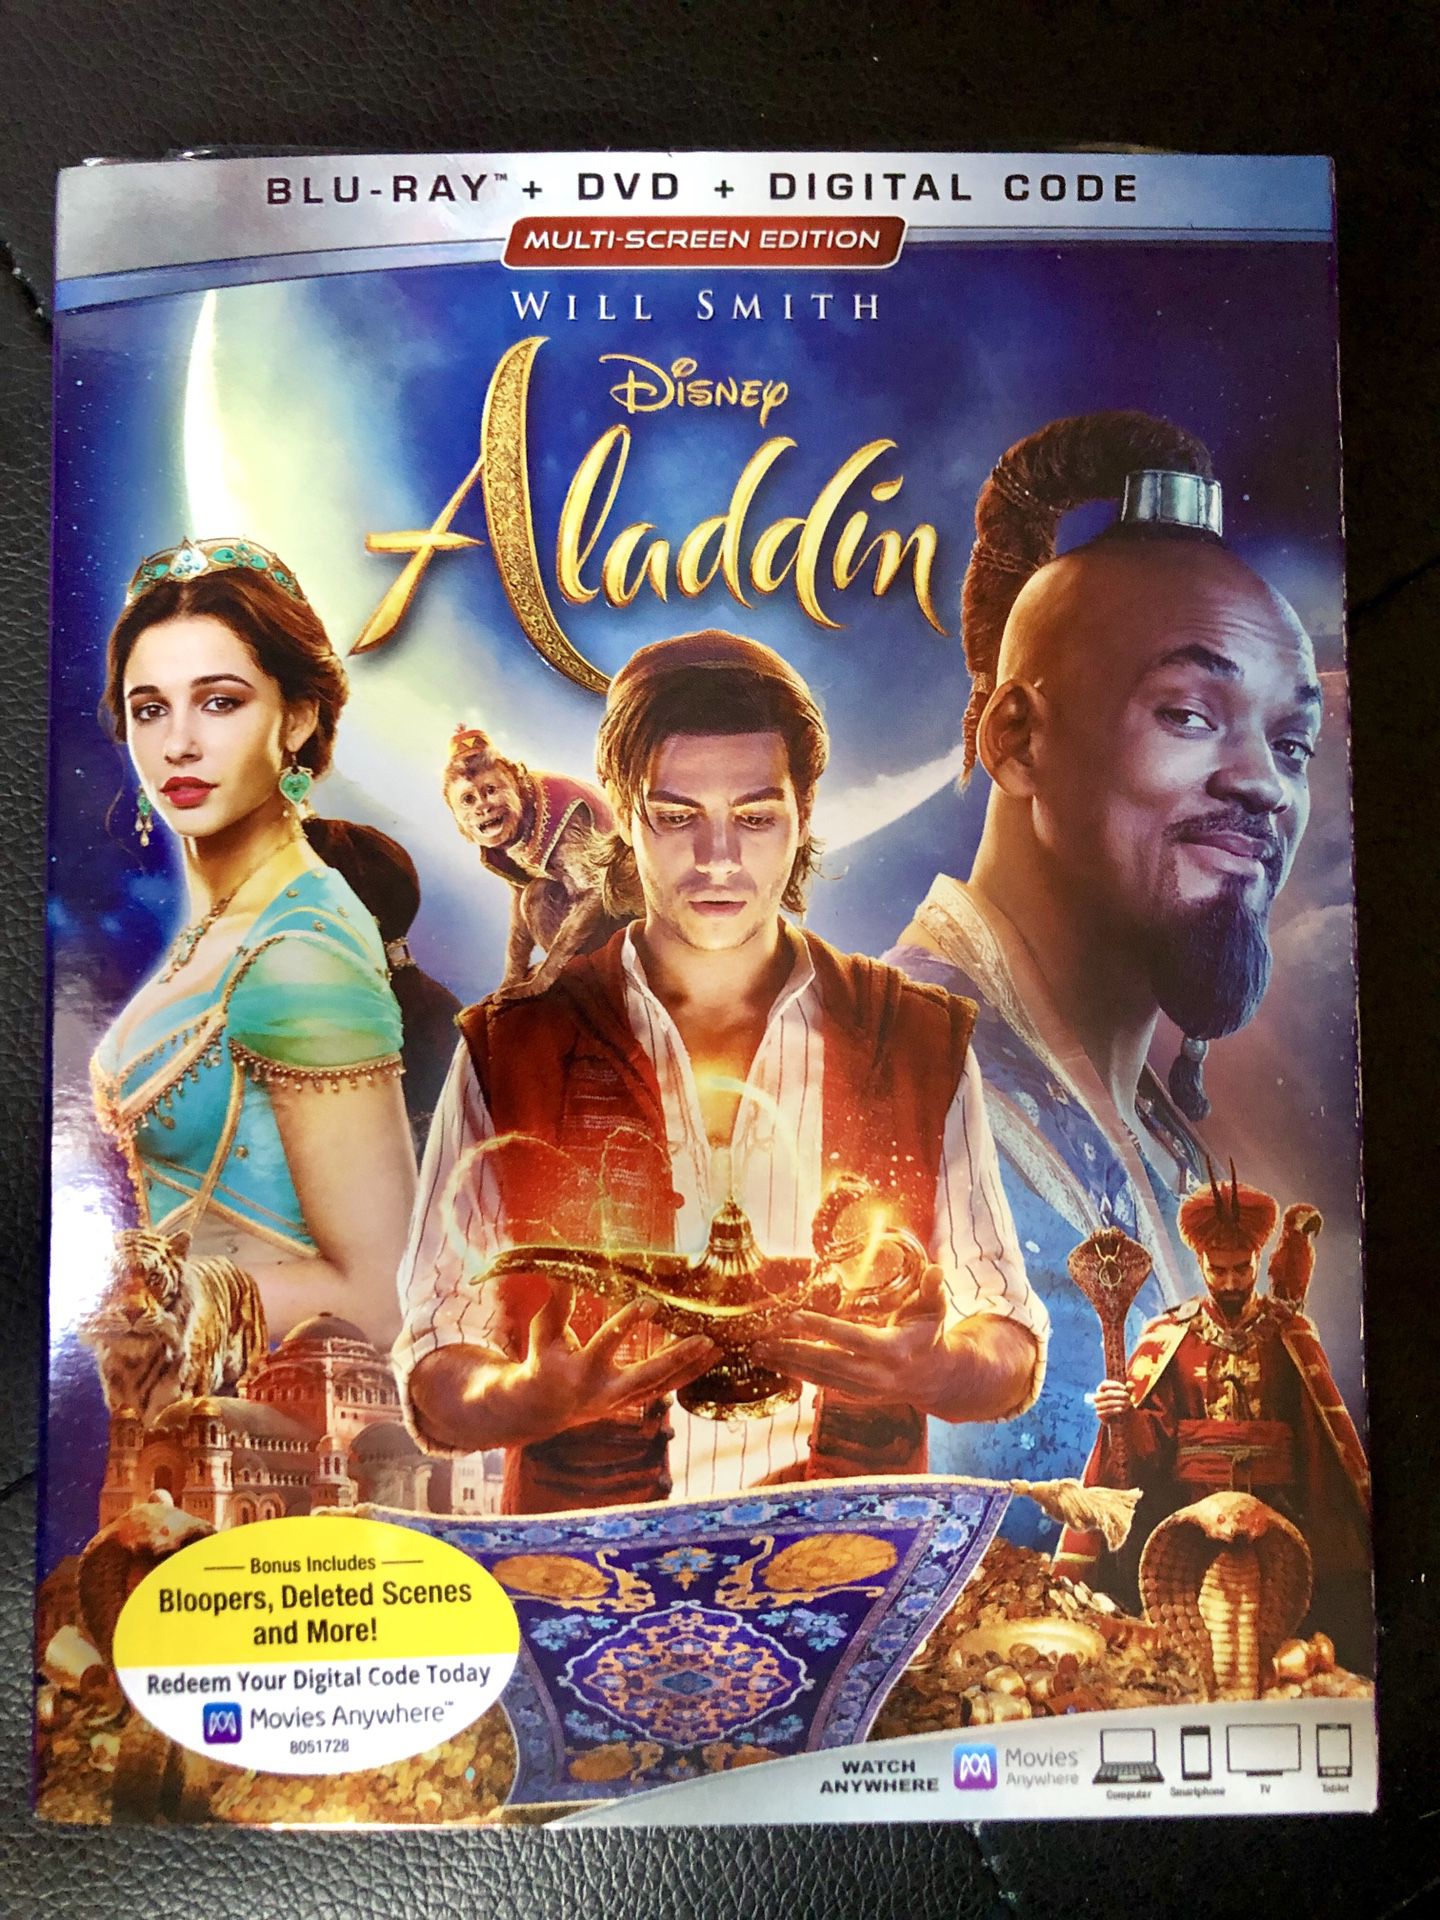 Disney Movie "ALADDIN" Bluray + Dvd + Digital Code